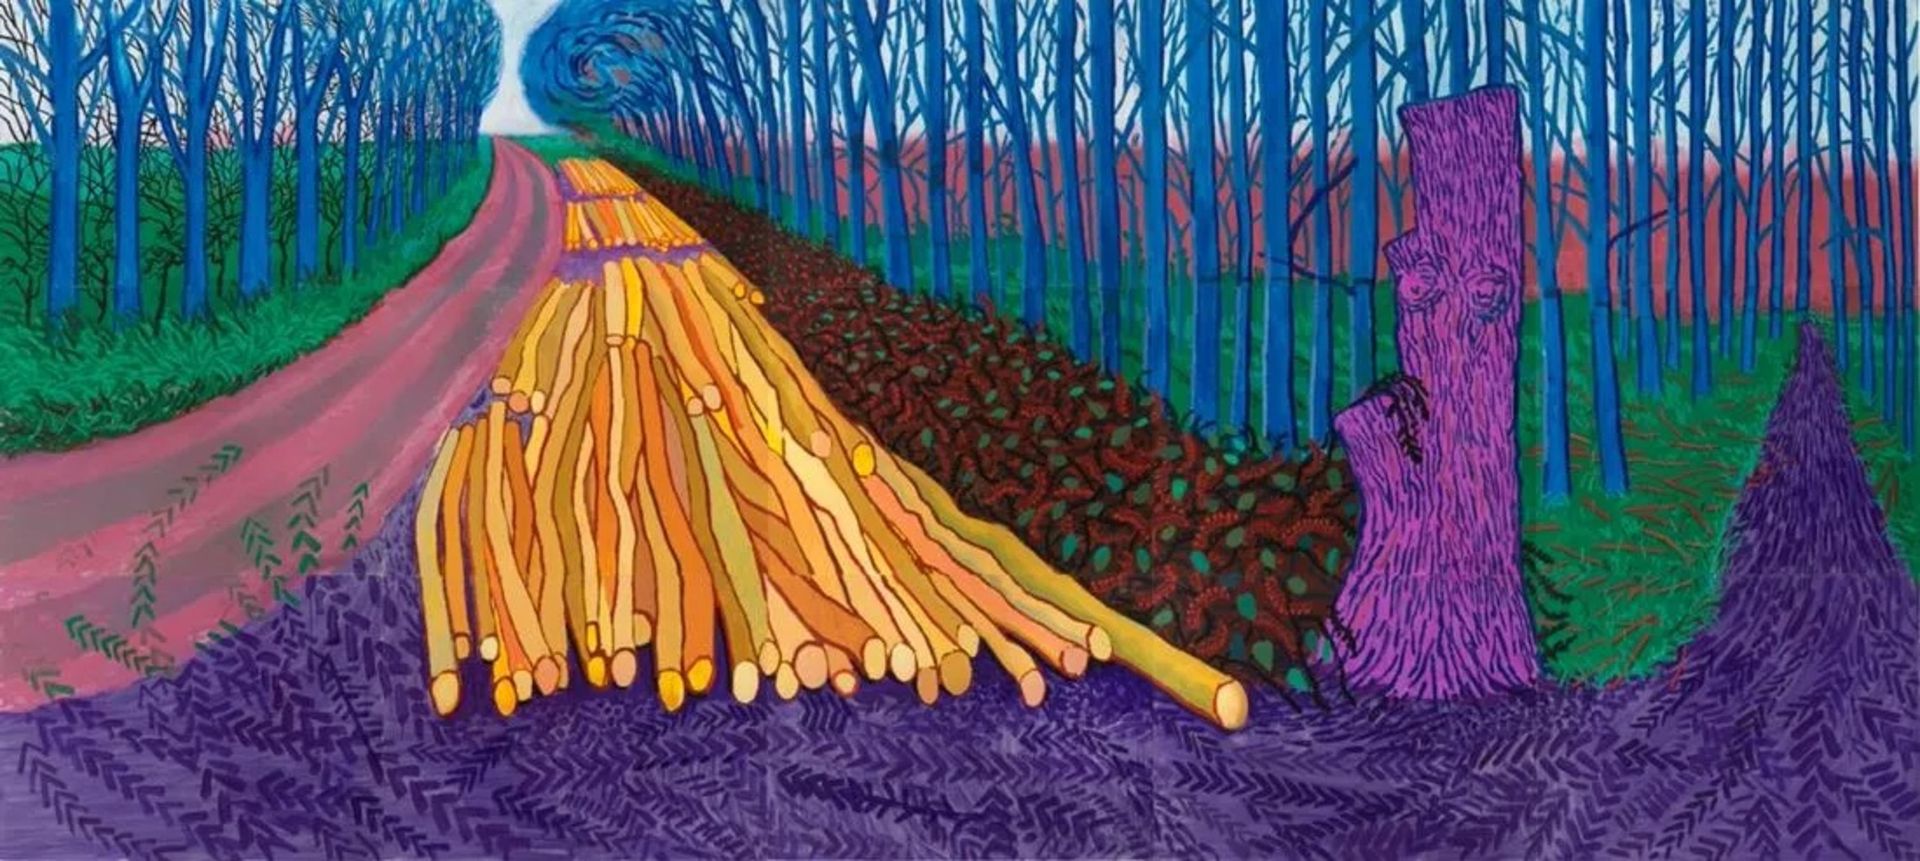 David Hockney "Winter Timber, 2009" Offset Lithograph